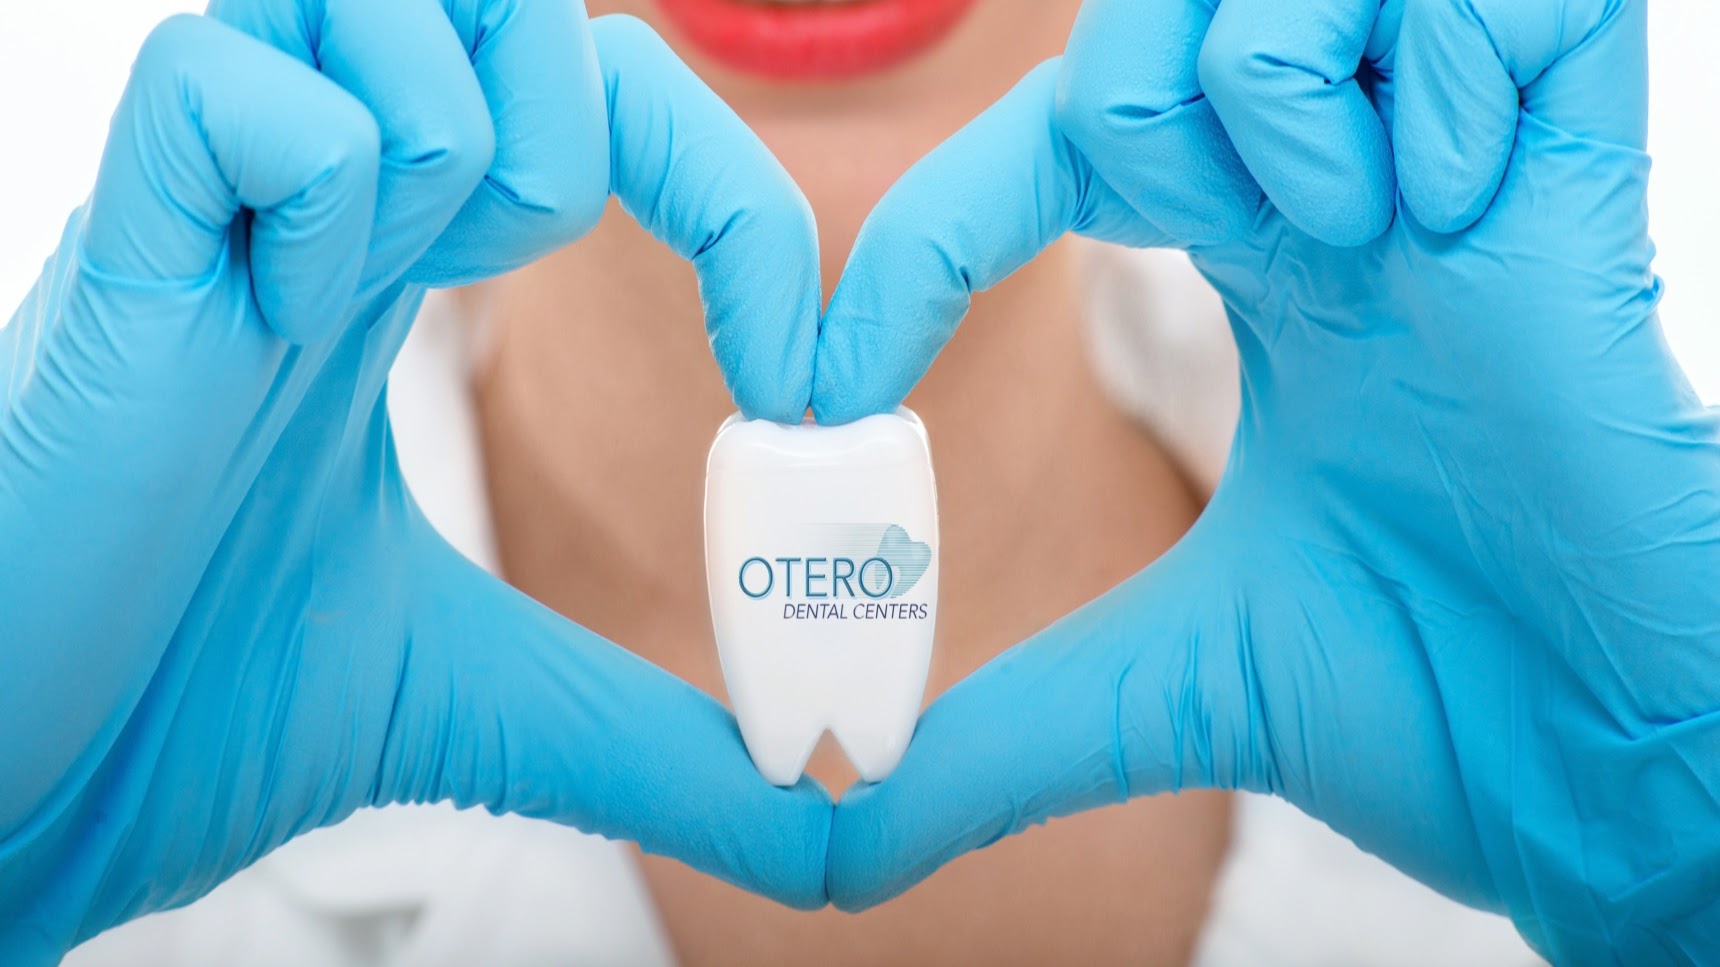 Otero Dental Centers Of Hialeah